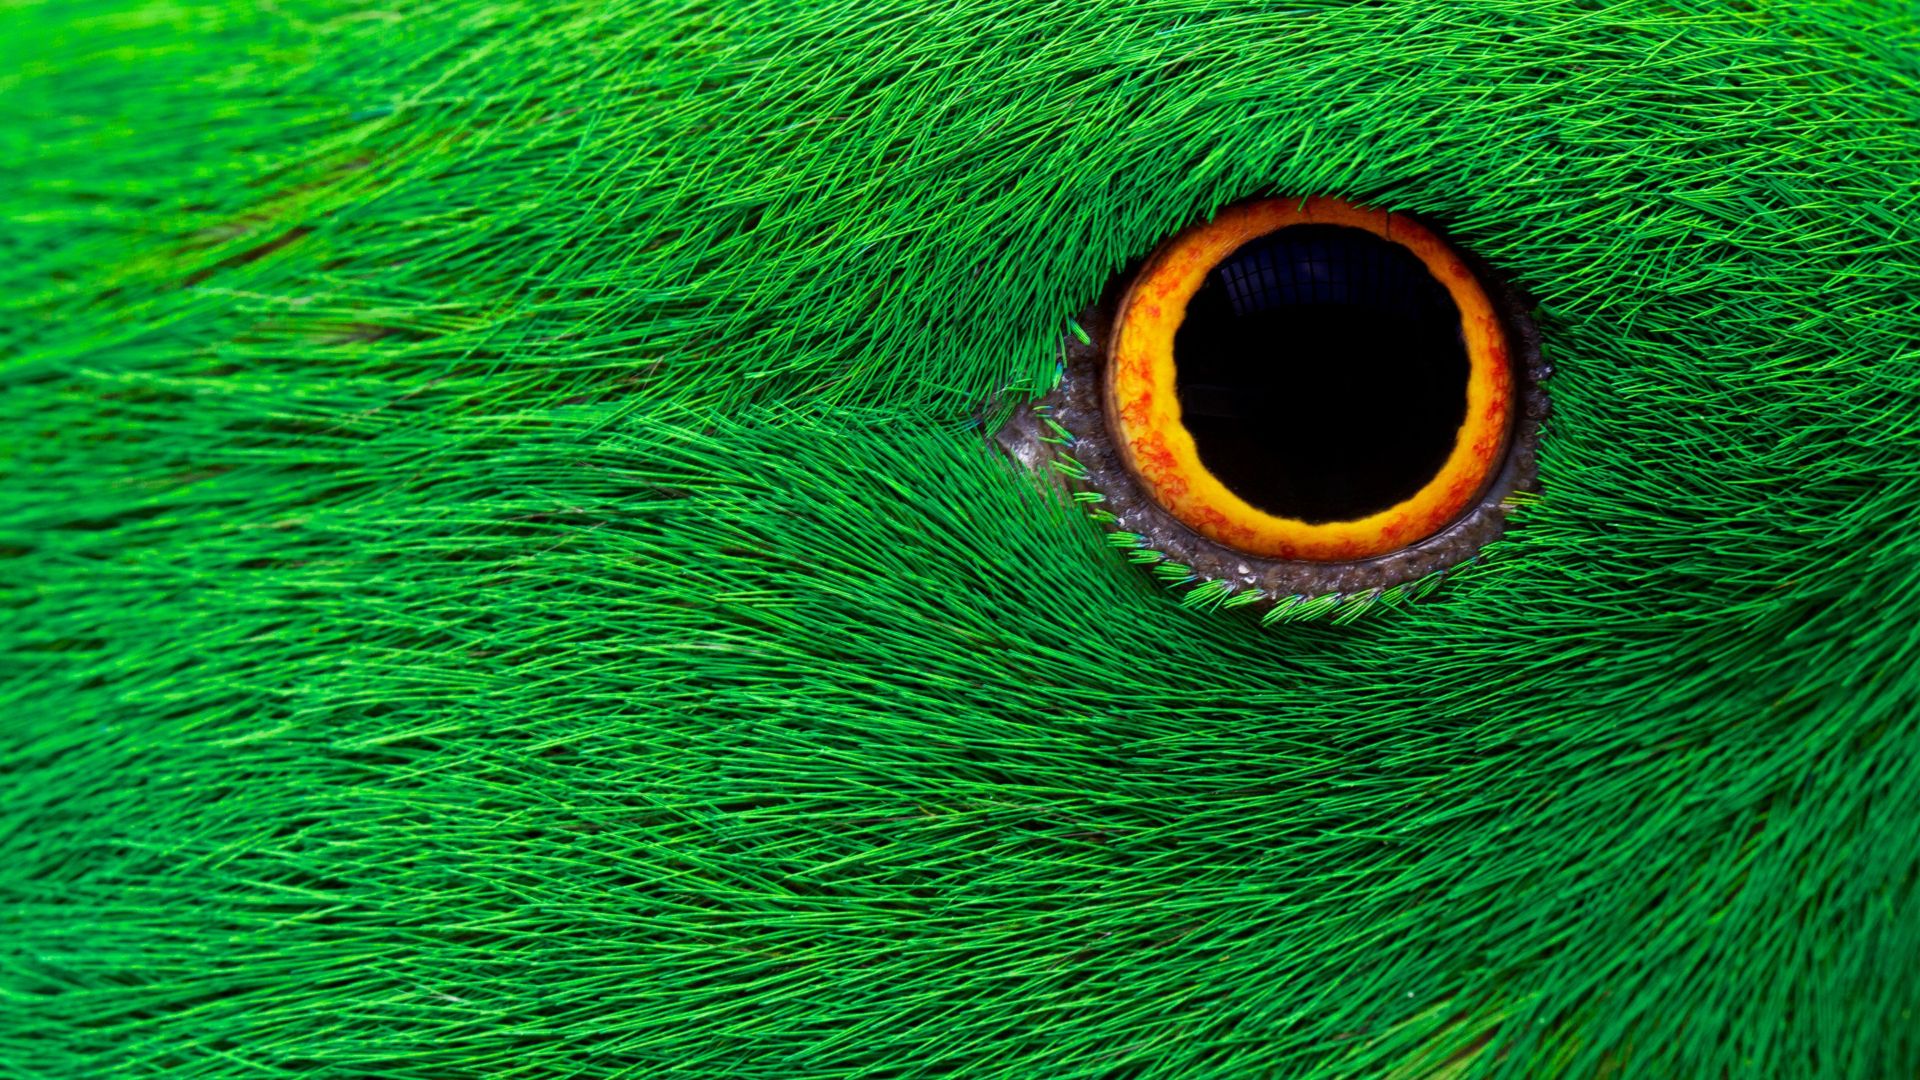 Desktop Wallpaper Green Parrot, Eye, Close Up, 5k, Hd Image, Picture,  Background, D6cf7a